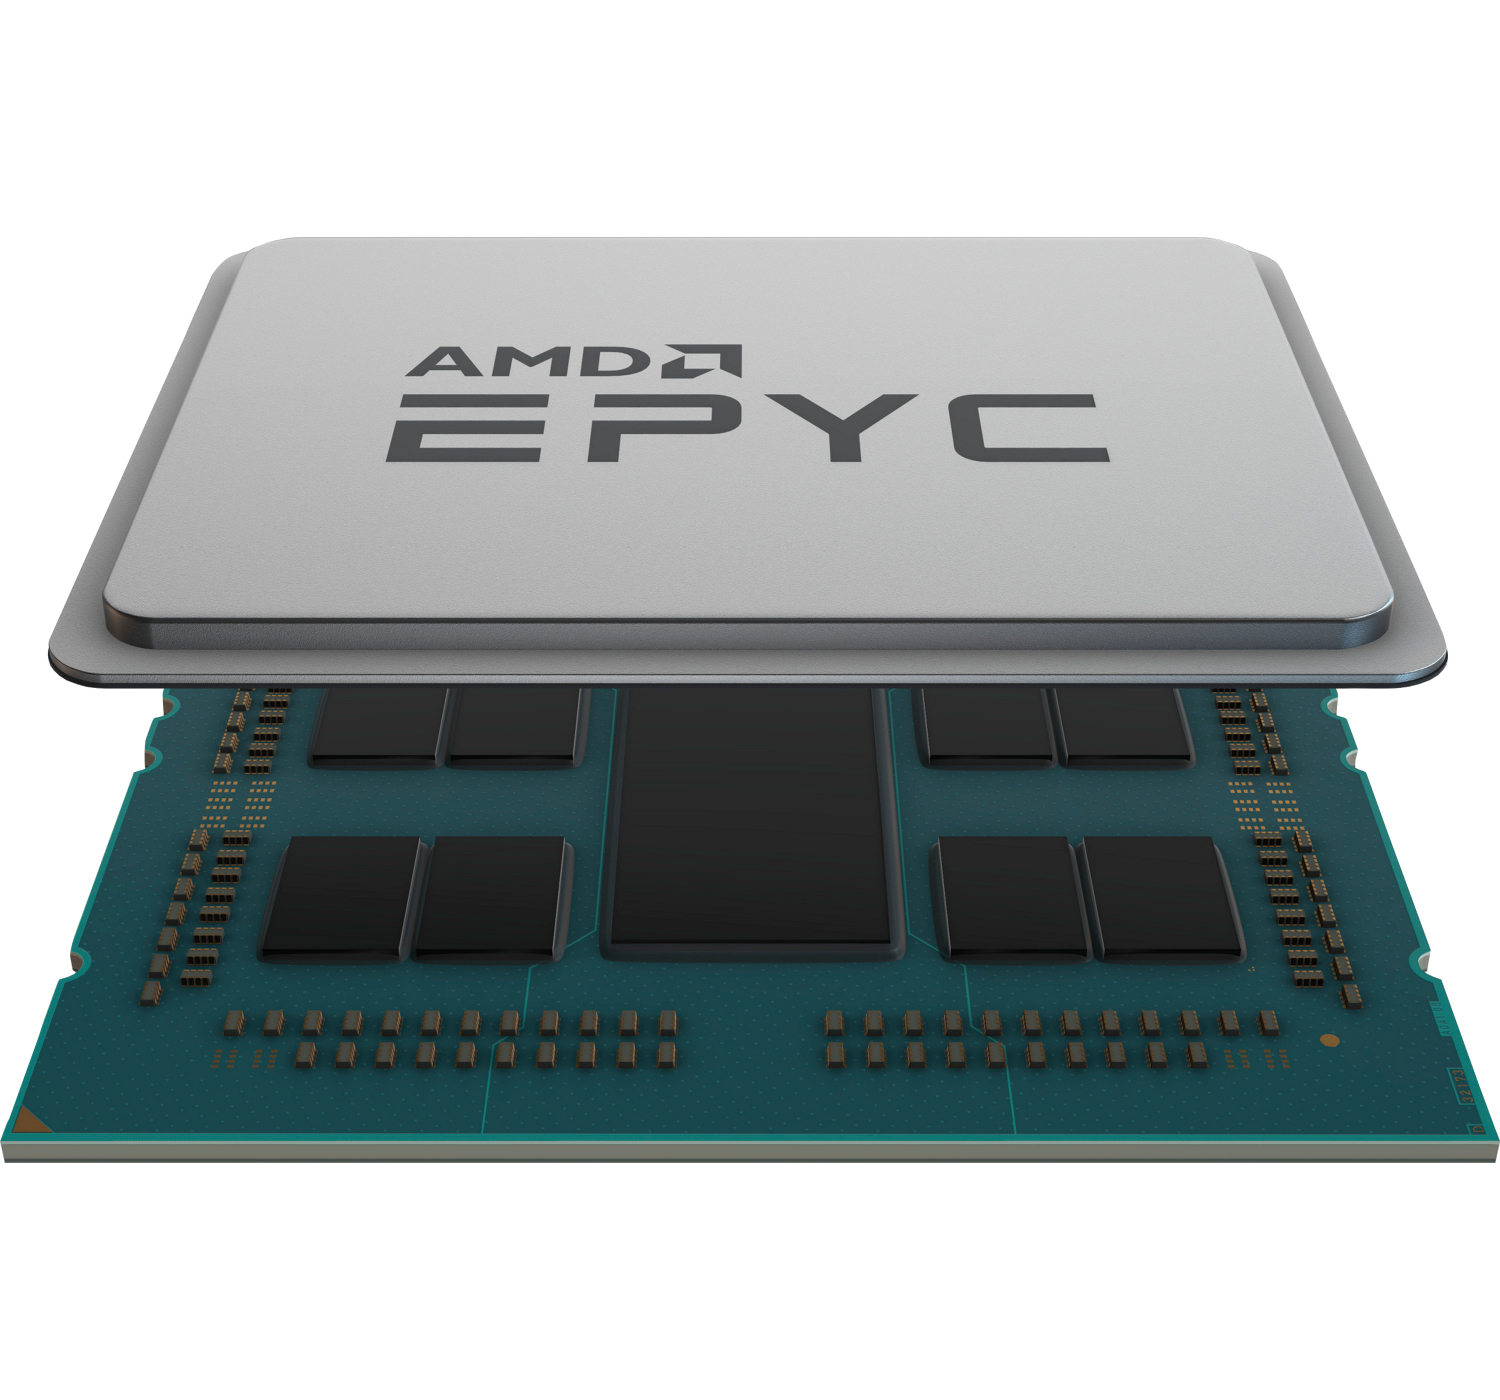 HPE DL385 Gen10+ AMD EPYC 7F52 Kit